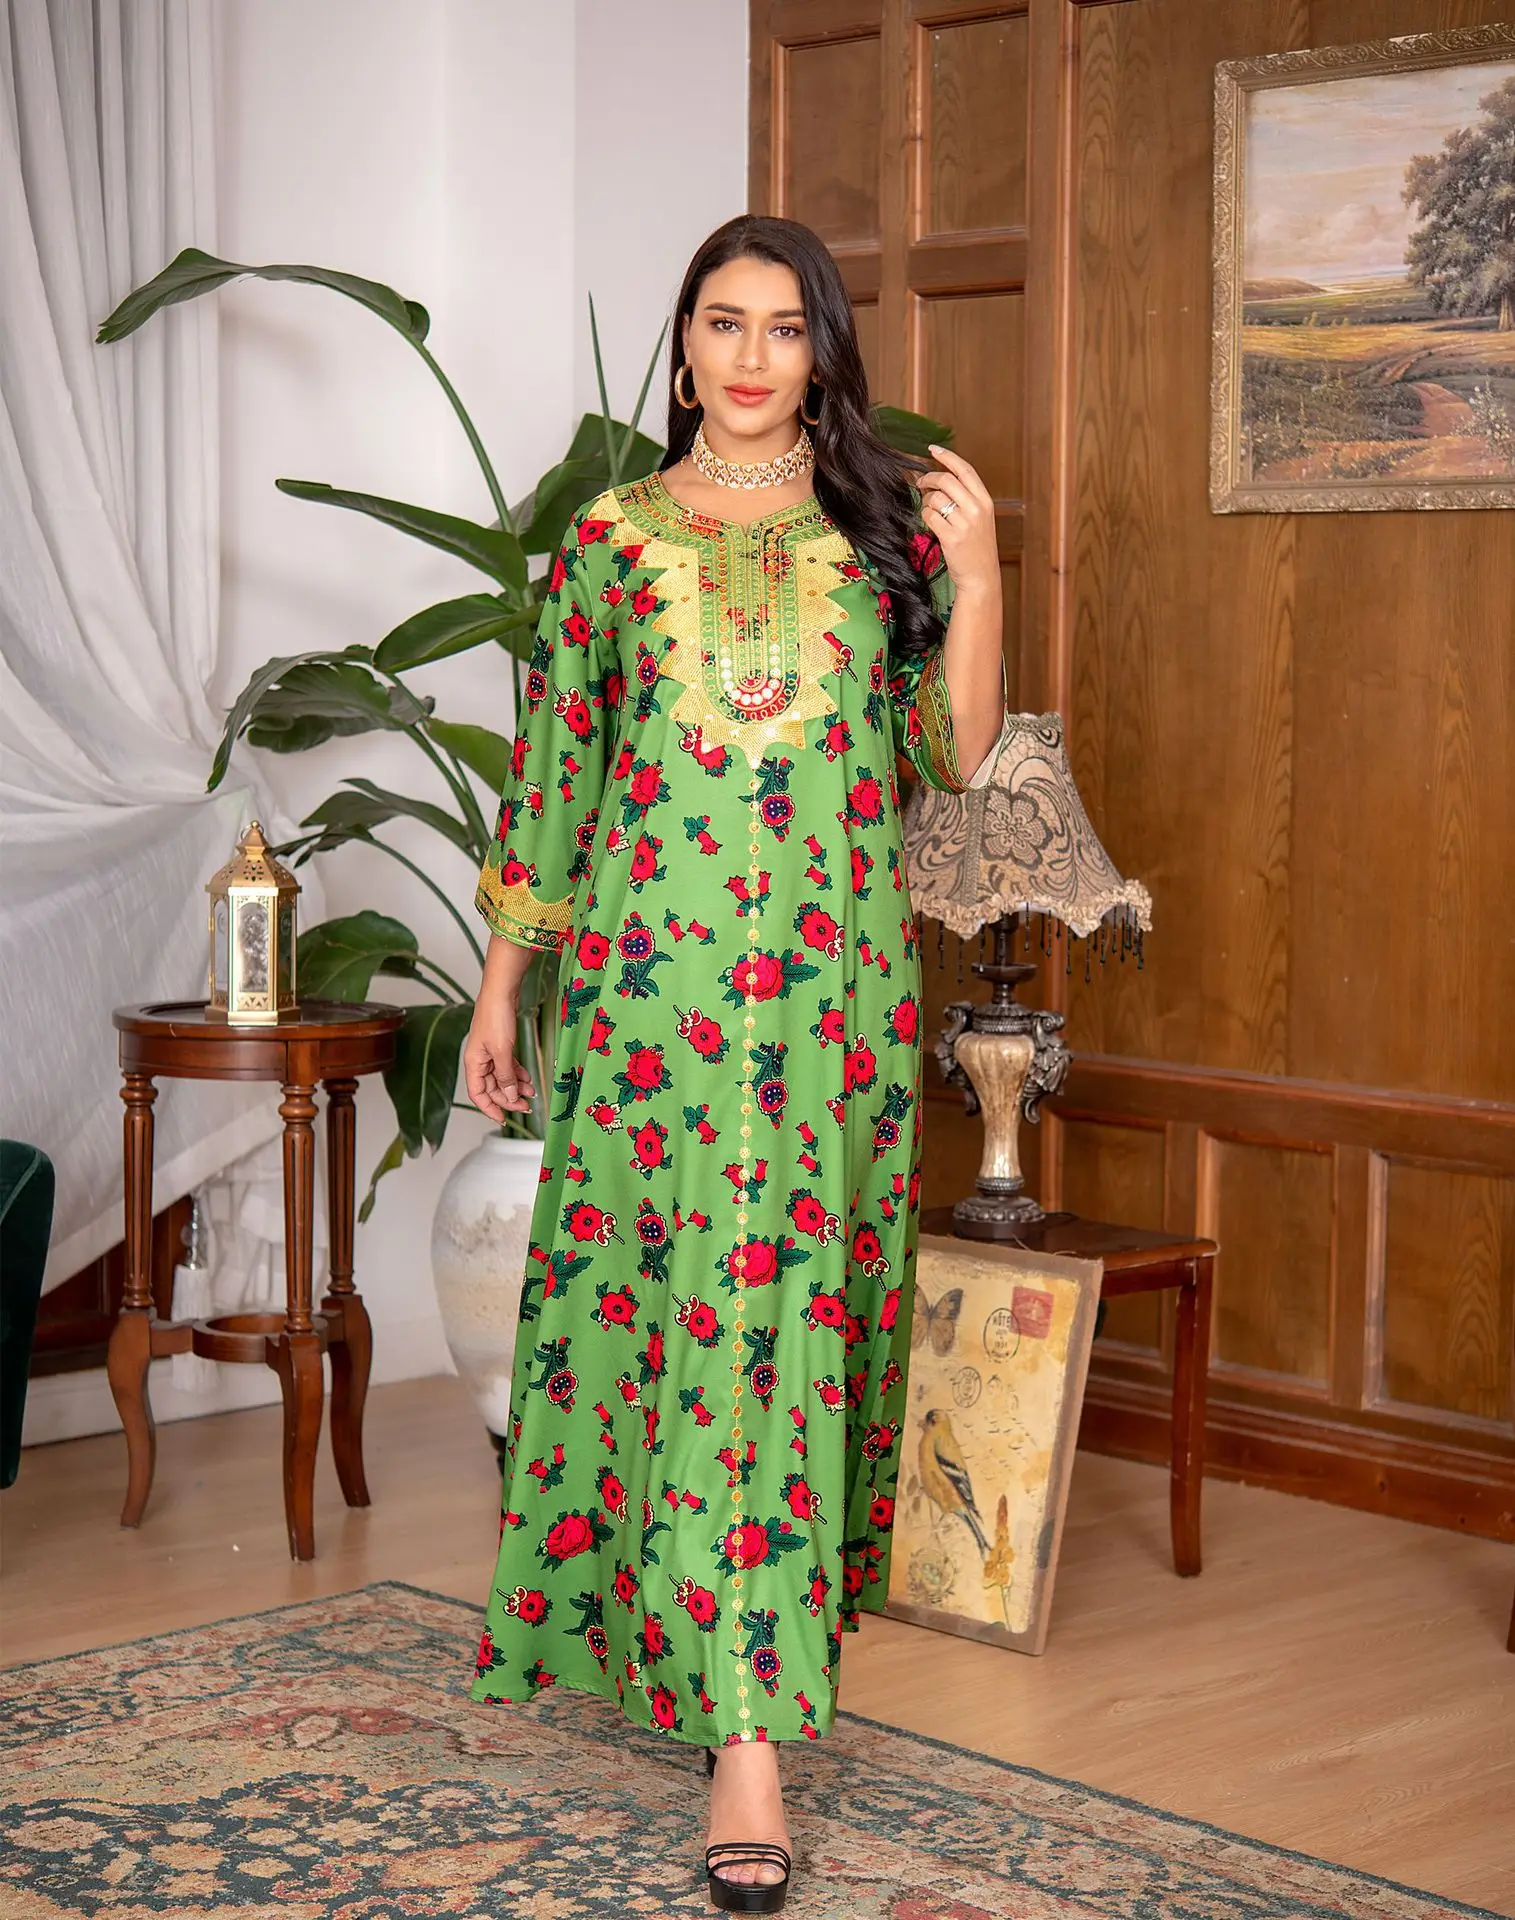 Siskakia Middle East Women Clothing Fashion Muslim Hijab Dress 2021 Ramadan Eid  Jalabiya Dubai Moroccan Kaftan Oman Arabic Robe long sleeve maxi dress